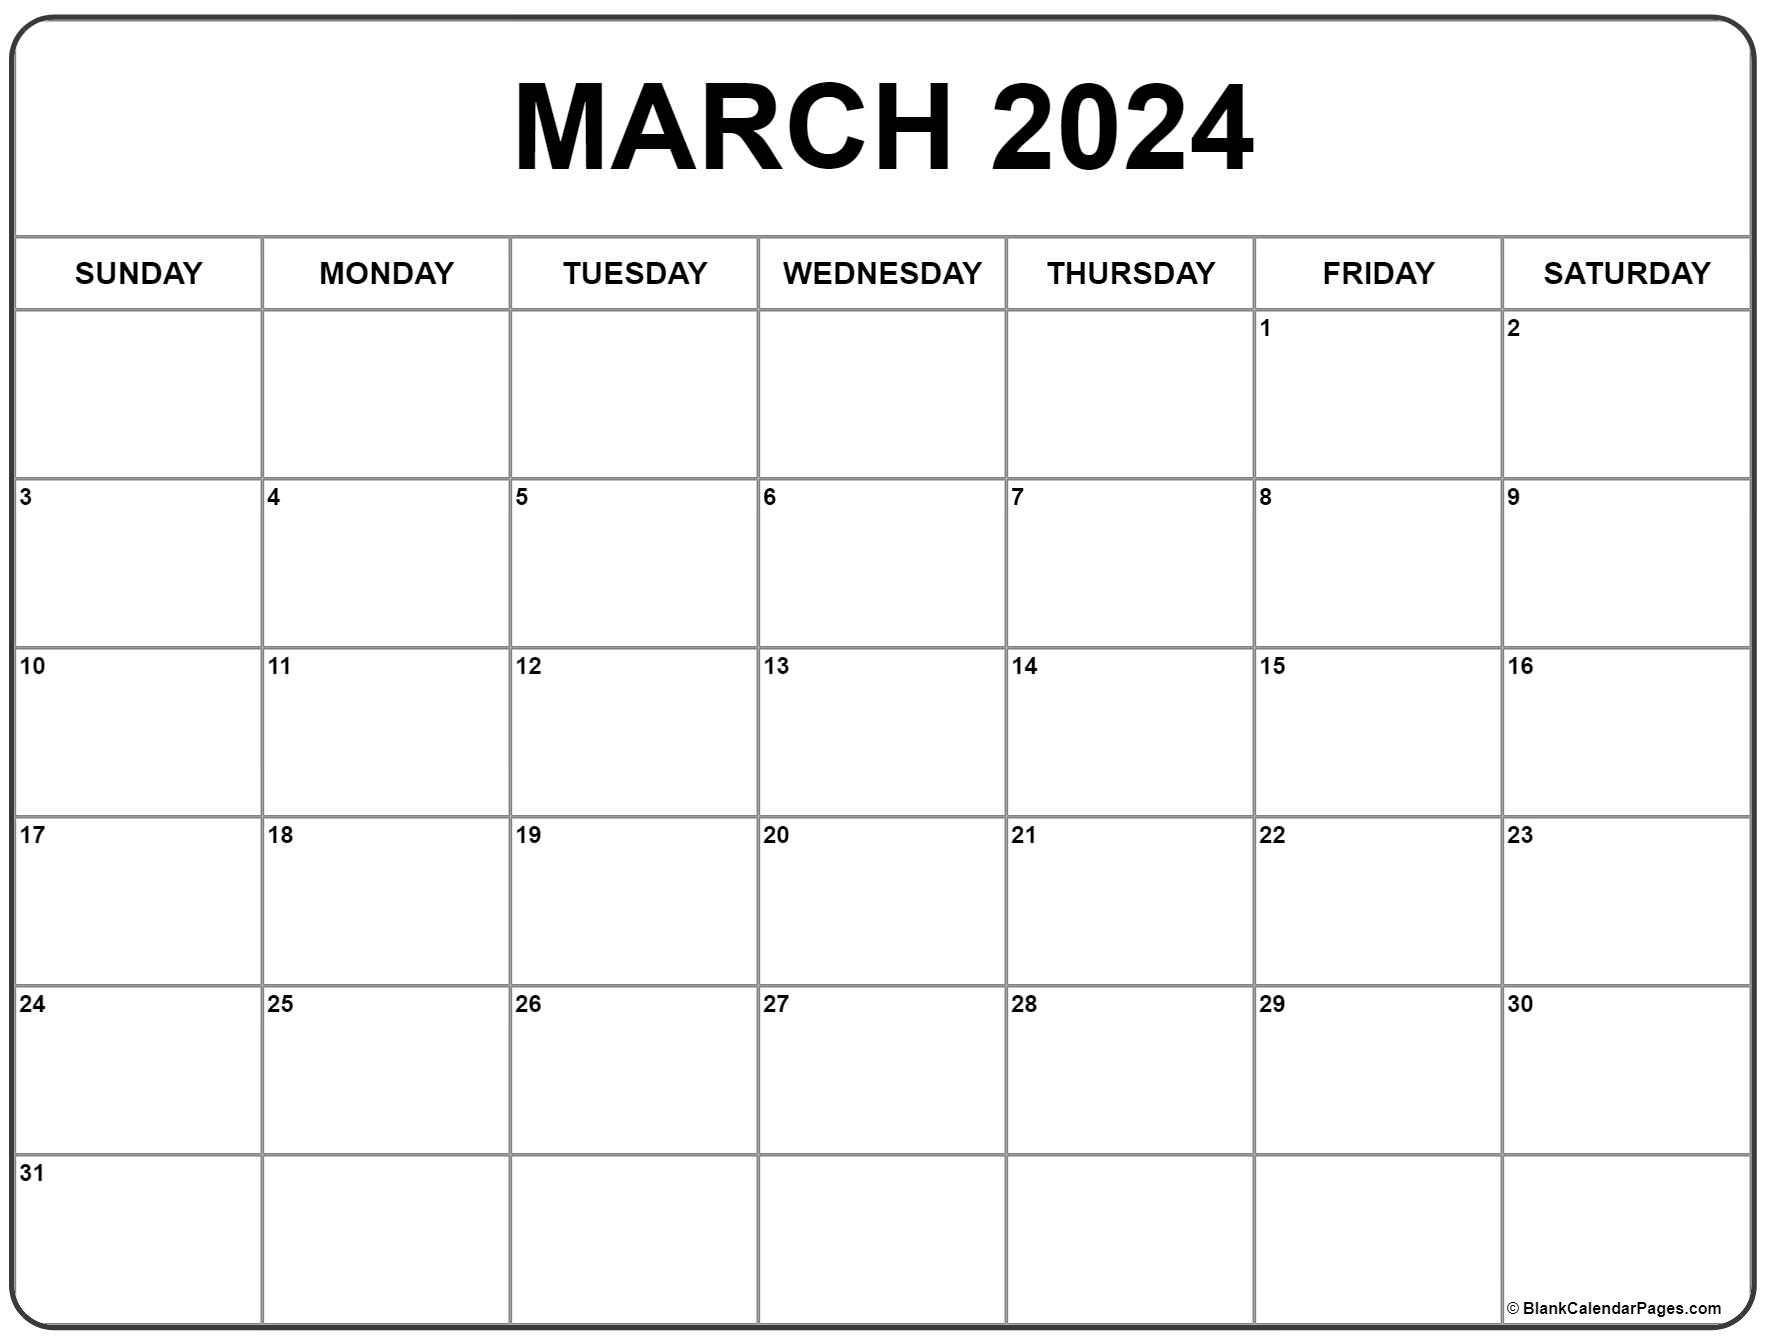 March 2024 Calendar | Free Printable Calendar for Blank March 2024 Printable Calendar